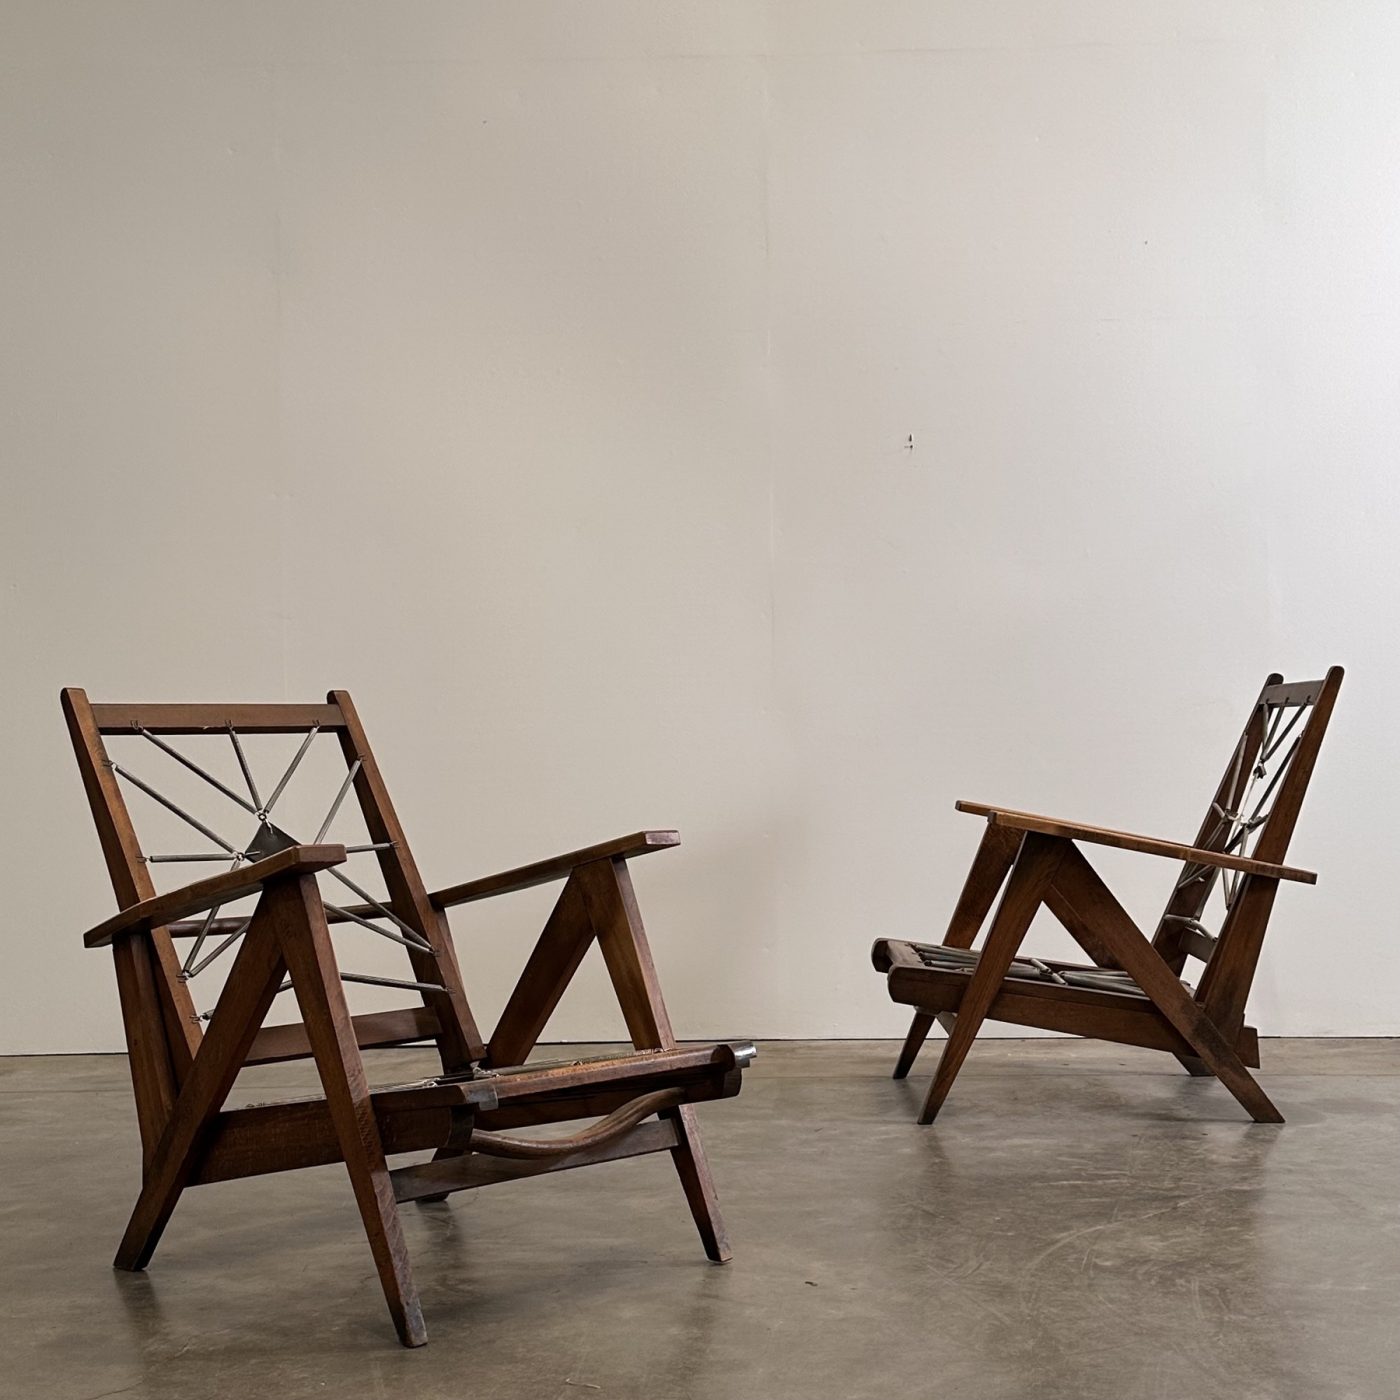 objet-vagabond-reconstruction-armchairs0006